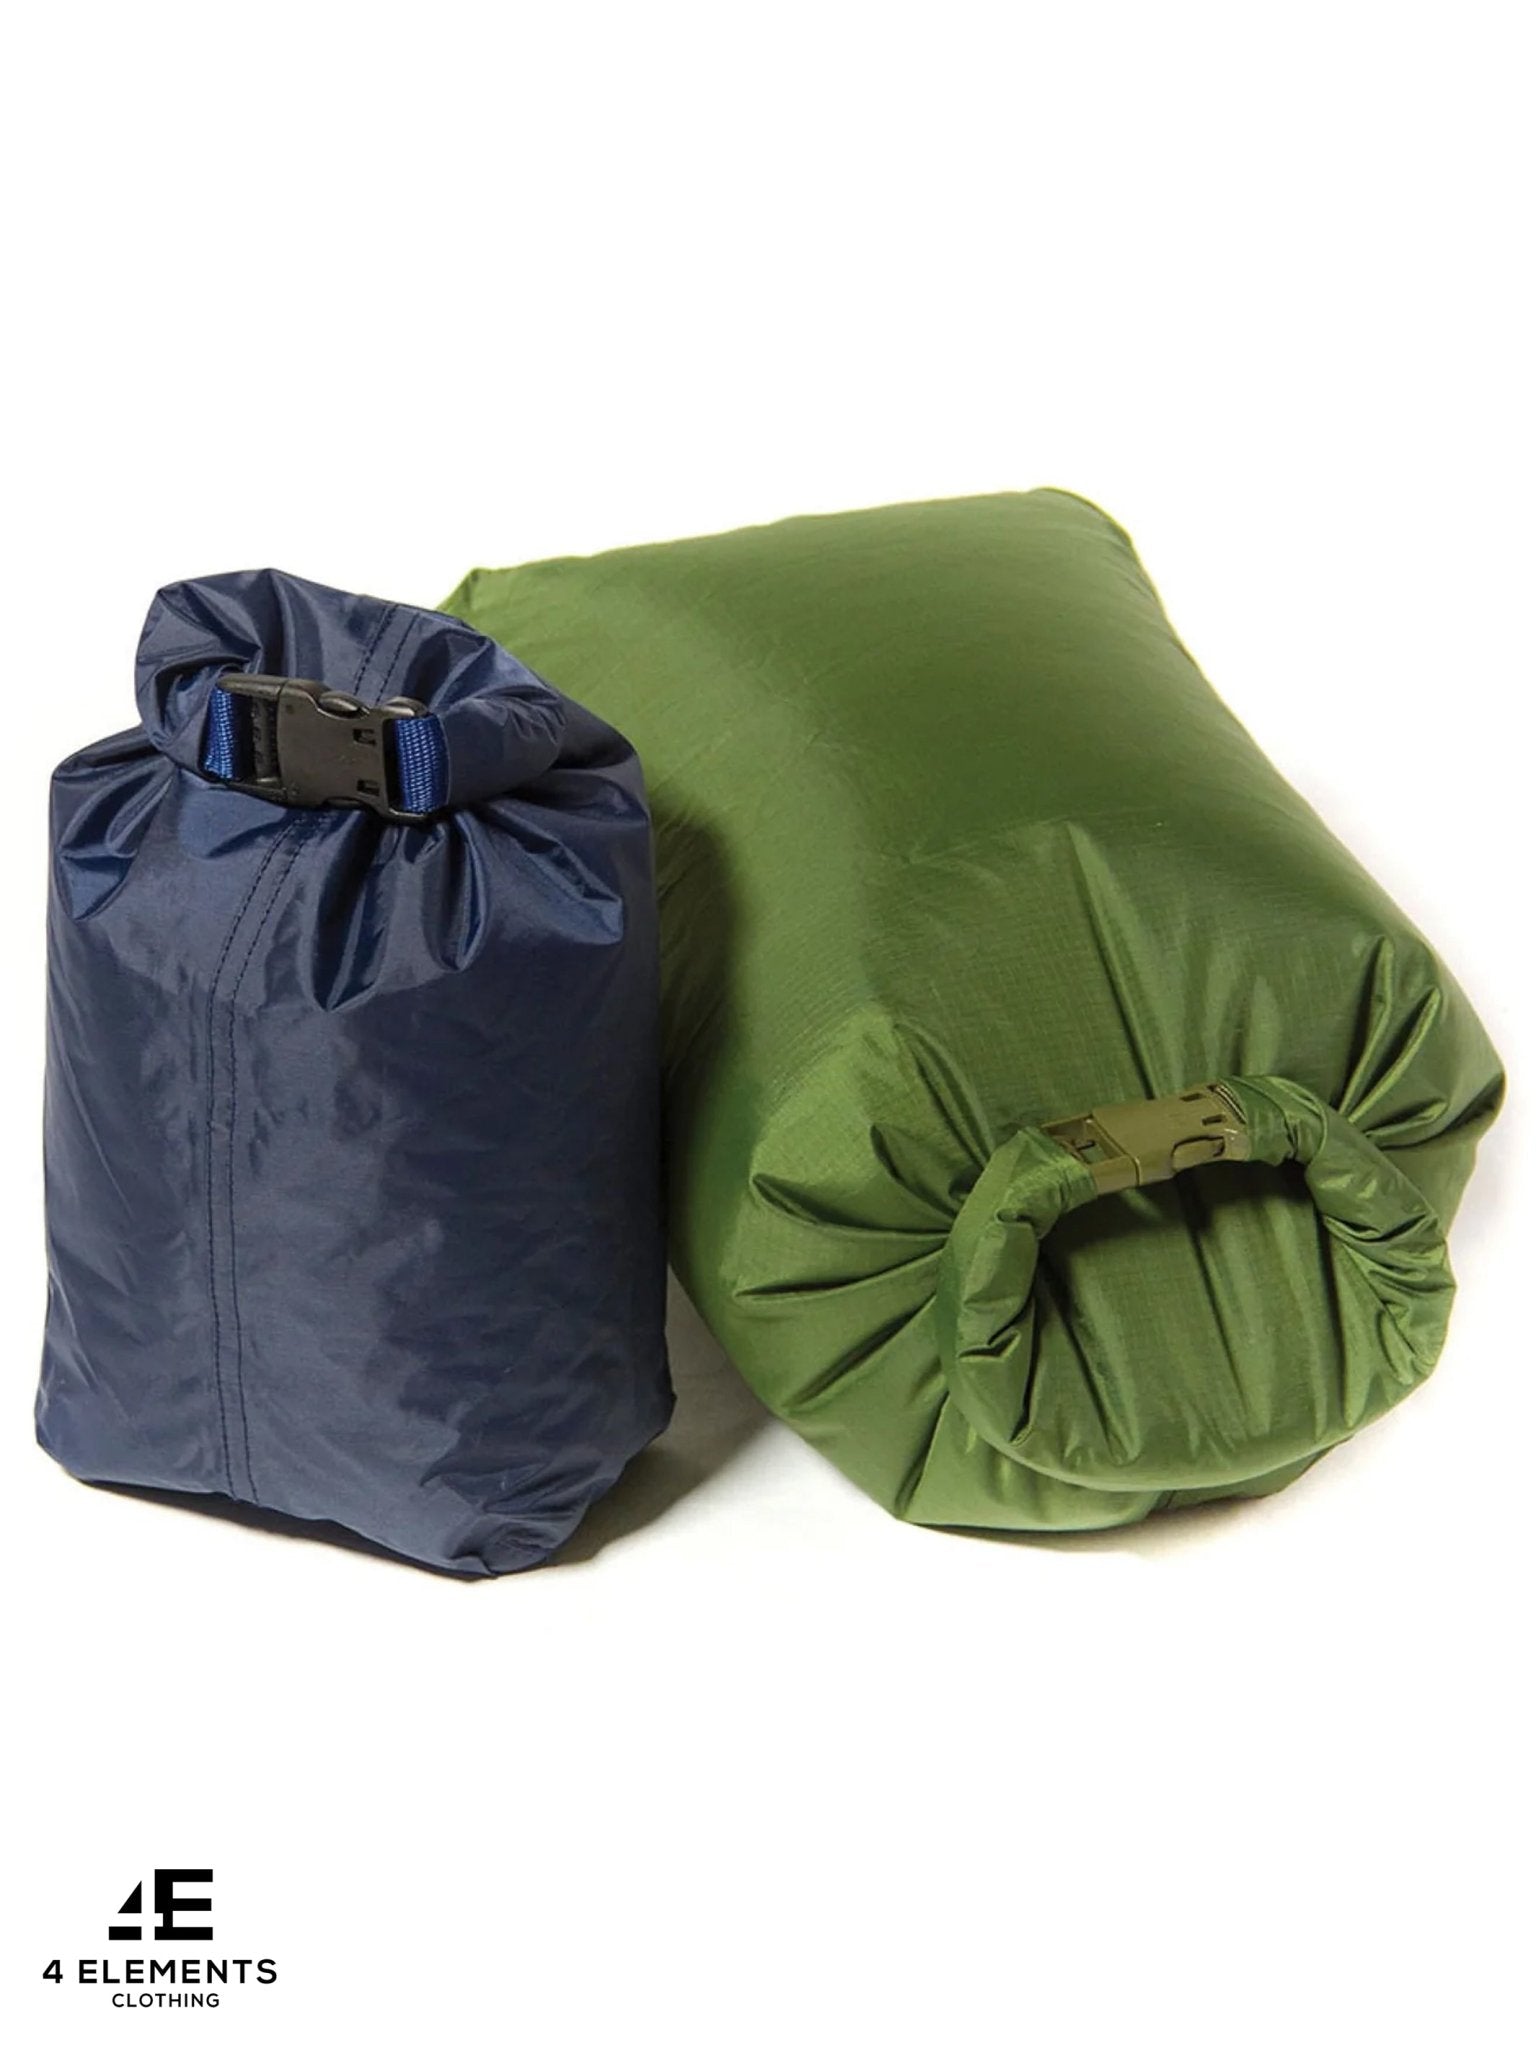 4elementsclothingArktisArktis - Drybag 30 litre Drysack / Day pack - T391 - Waterproof taped seamsBagT391-G